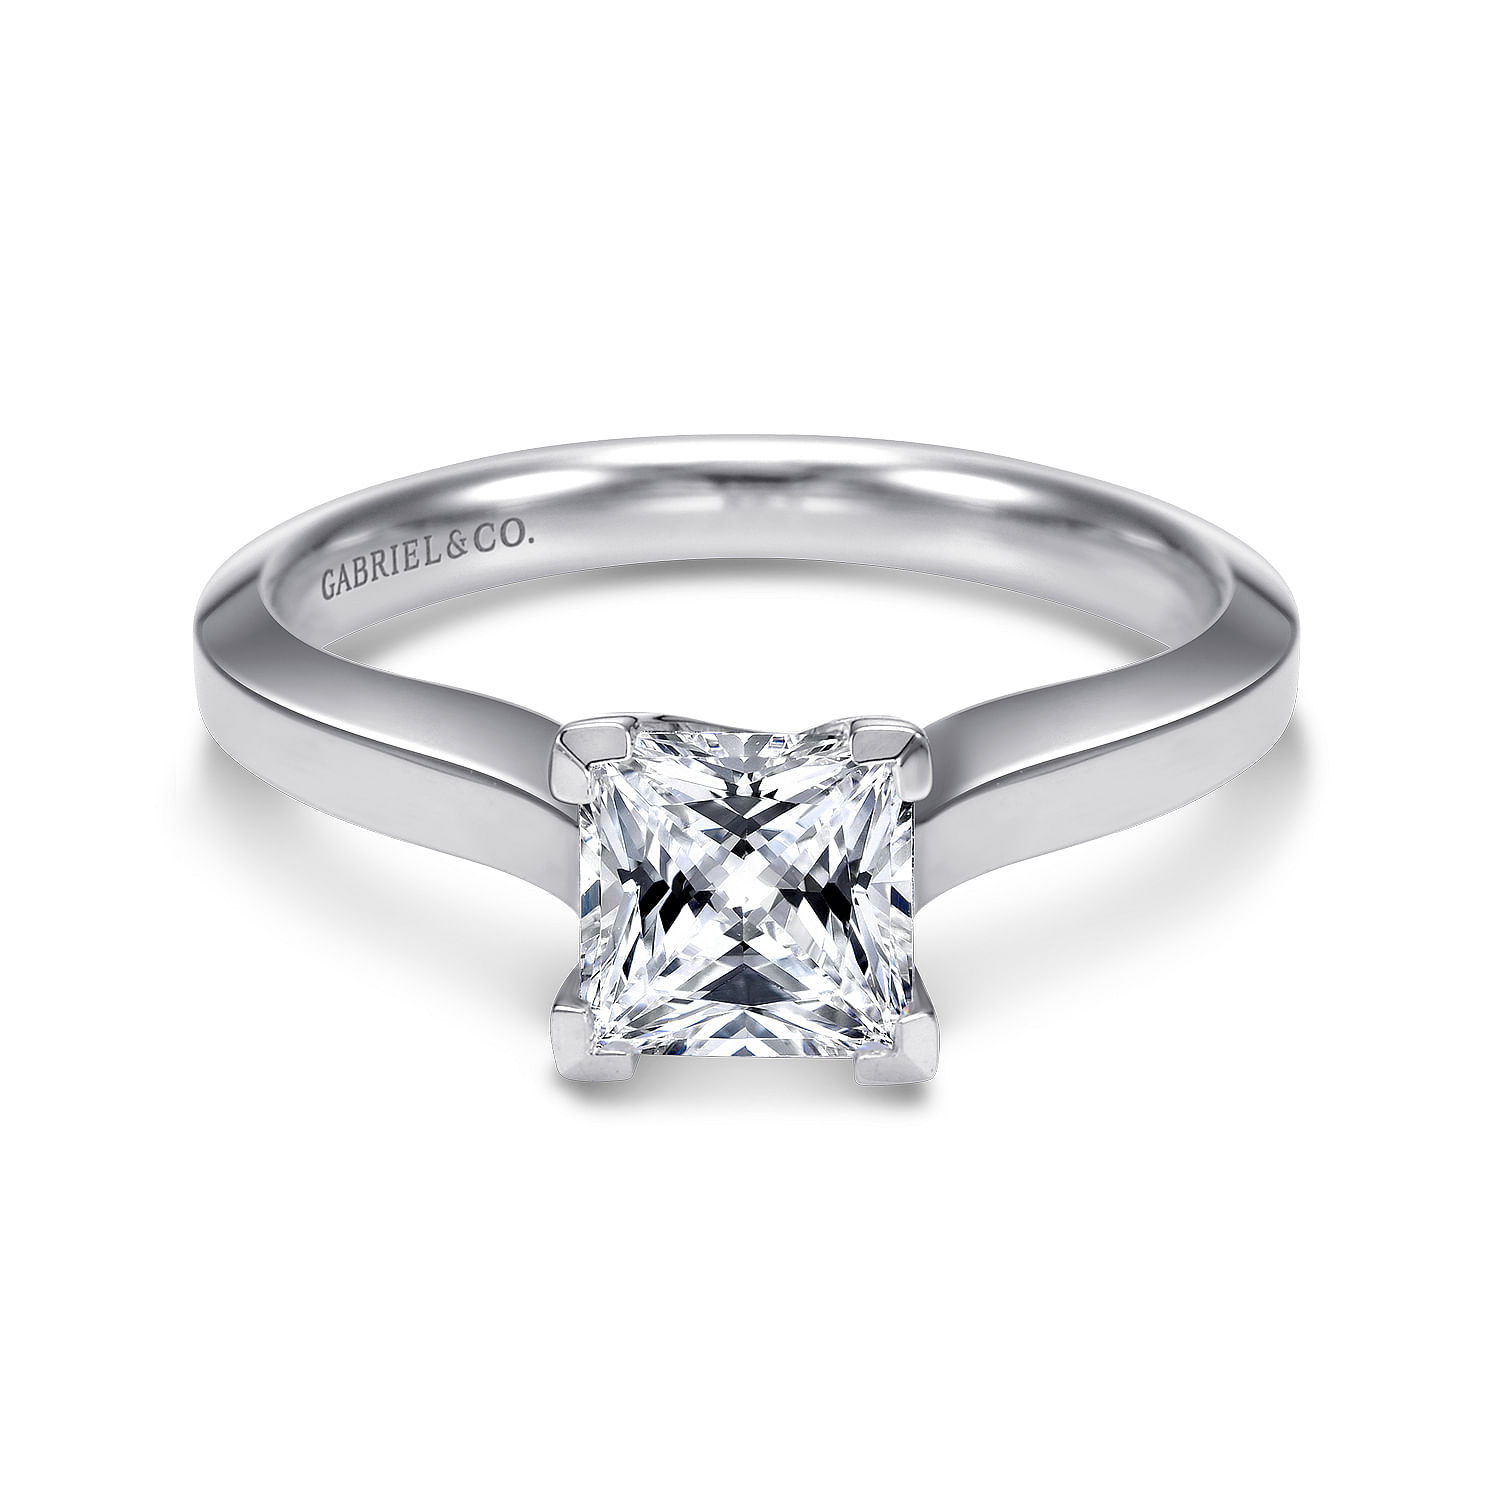 Hunter - 14K White Gold Princess Cut Diamond Engagement Ring